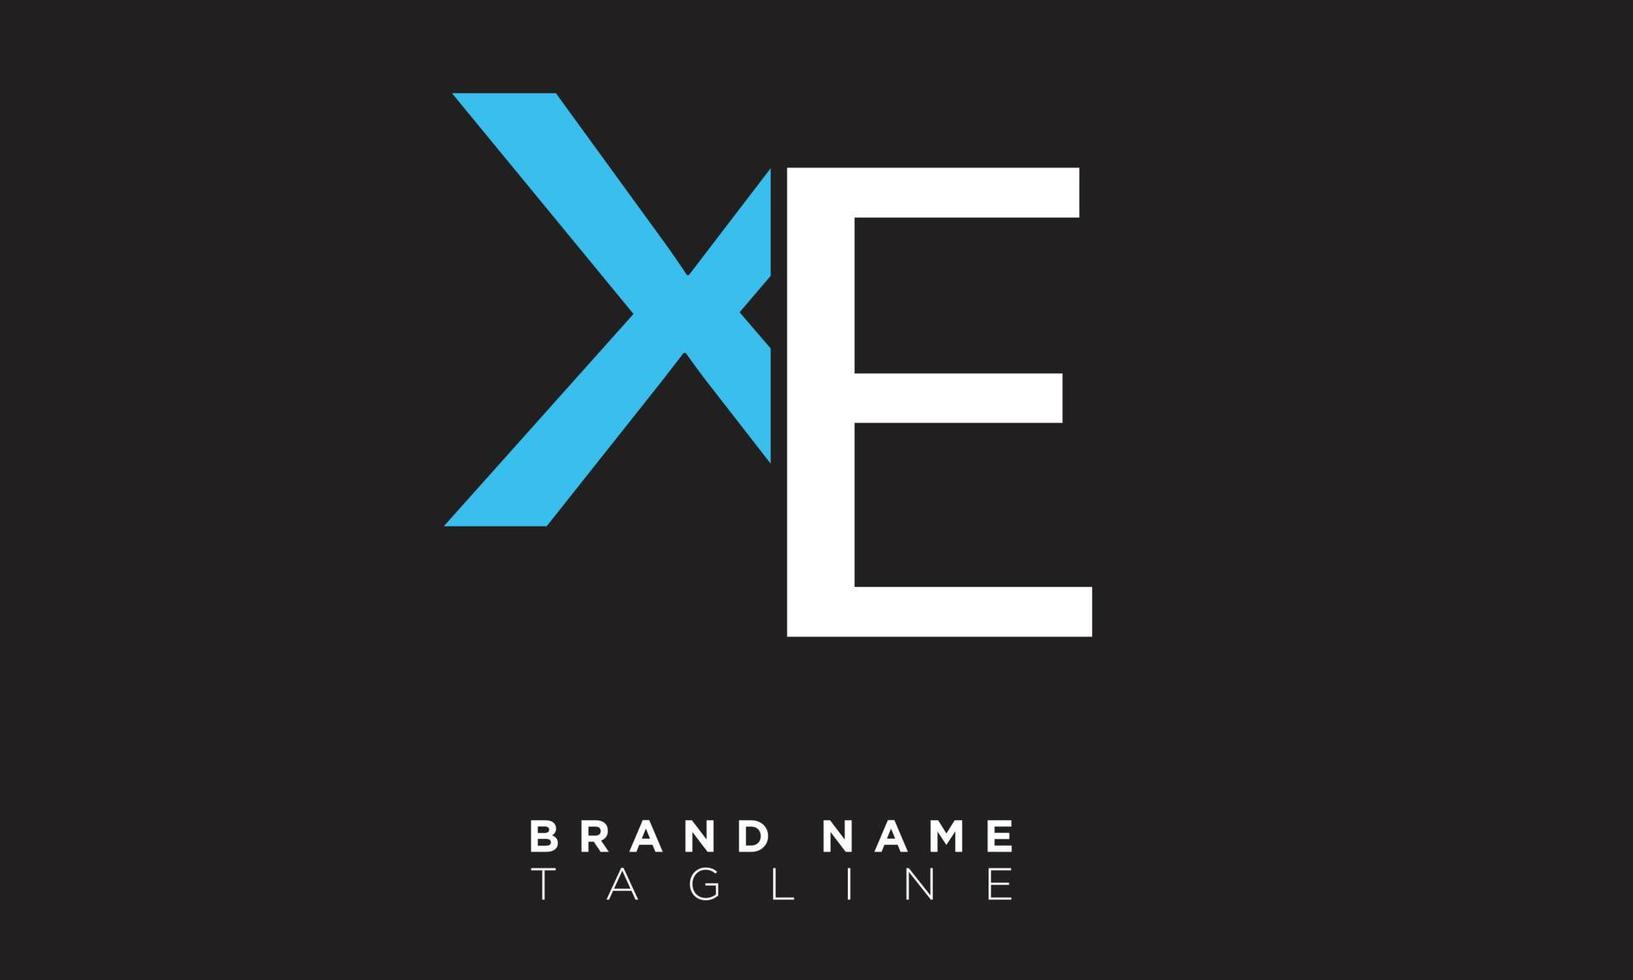 XE Alphabet letters Initials Monogram logo EX, X and E vector